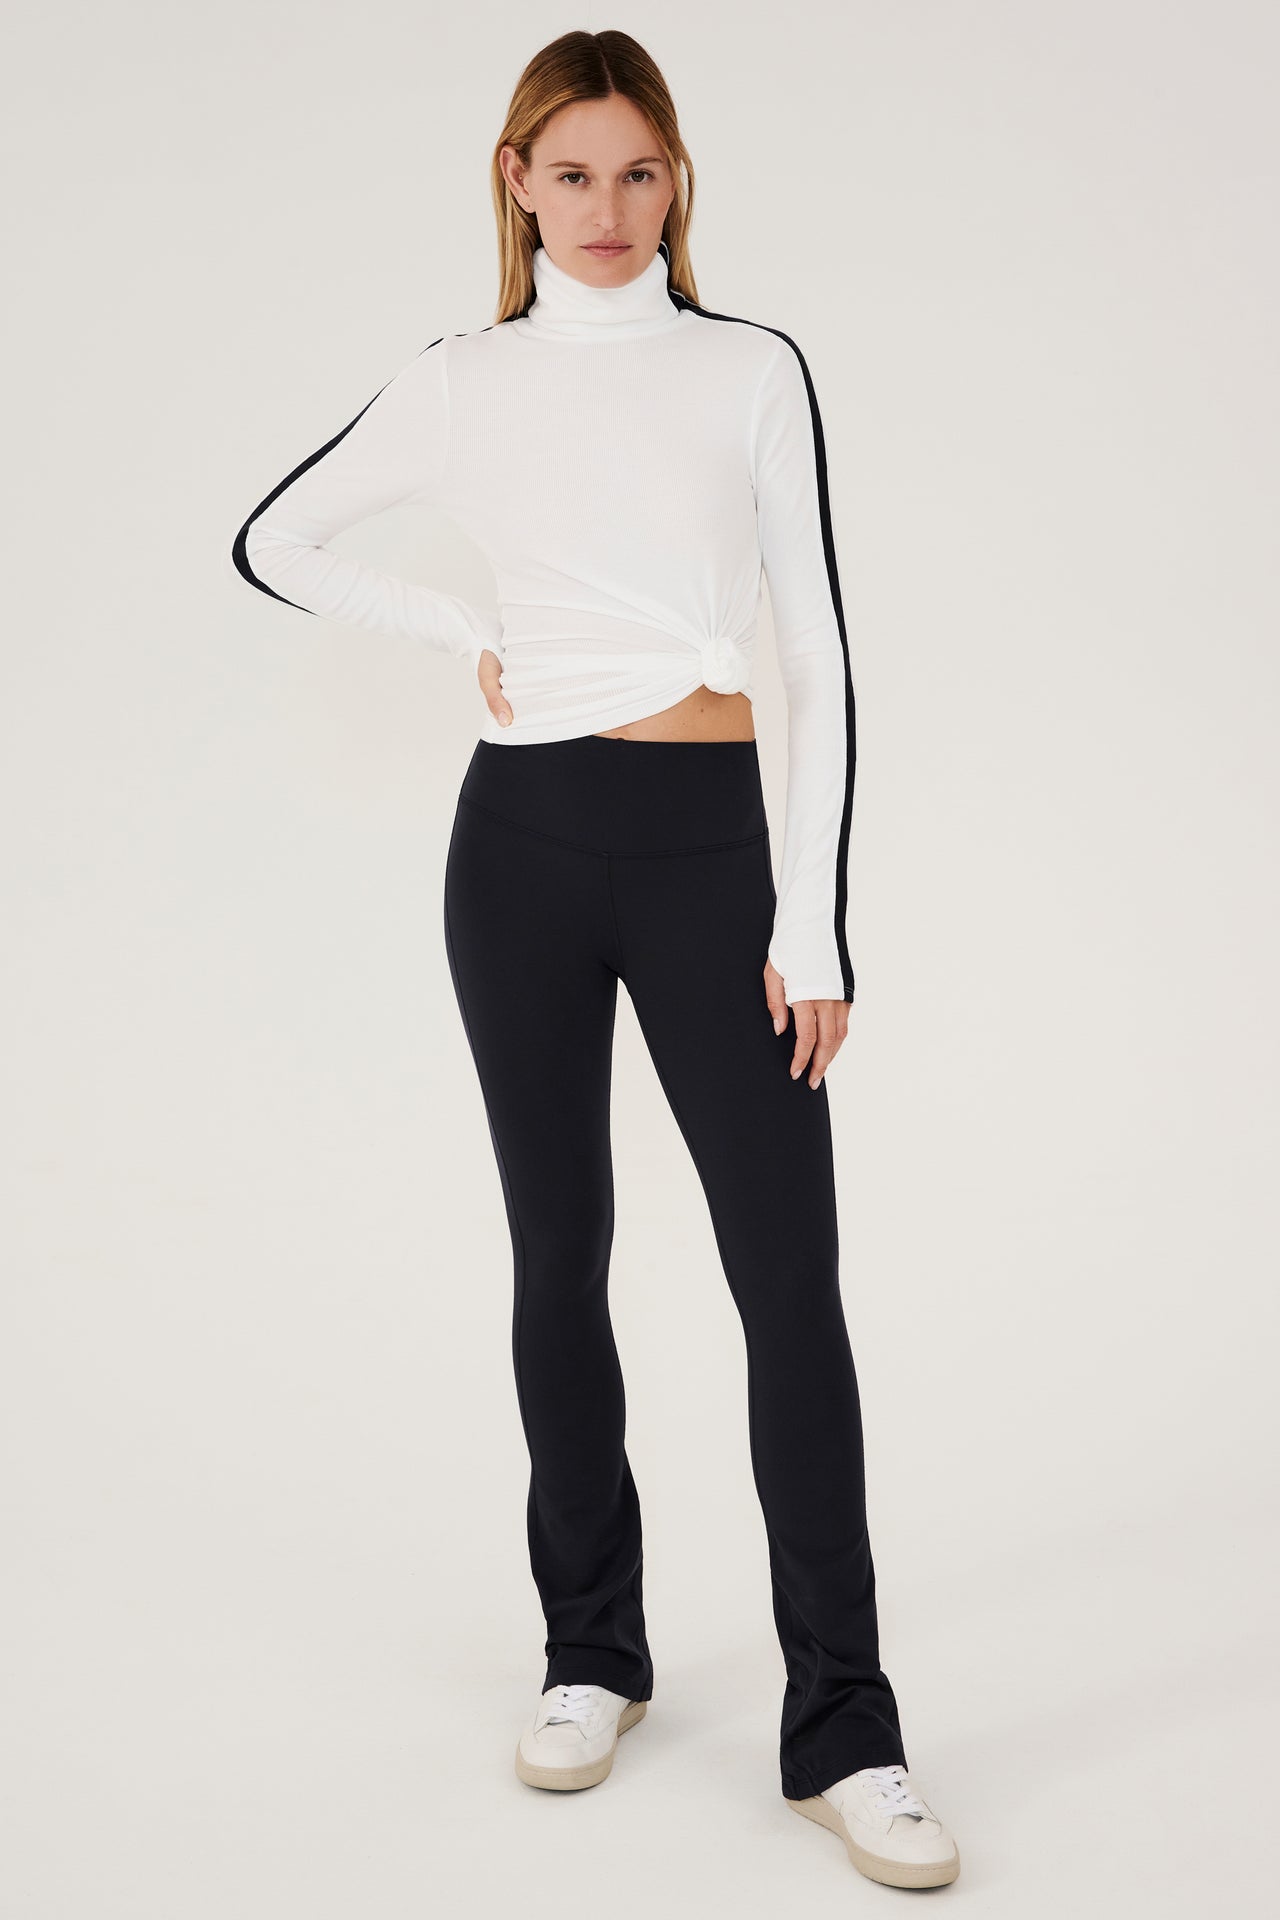 A woman wearing black leggings and a SPLITS59 Jackson Rib Full Length Turtleneck - White/Black top.